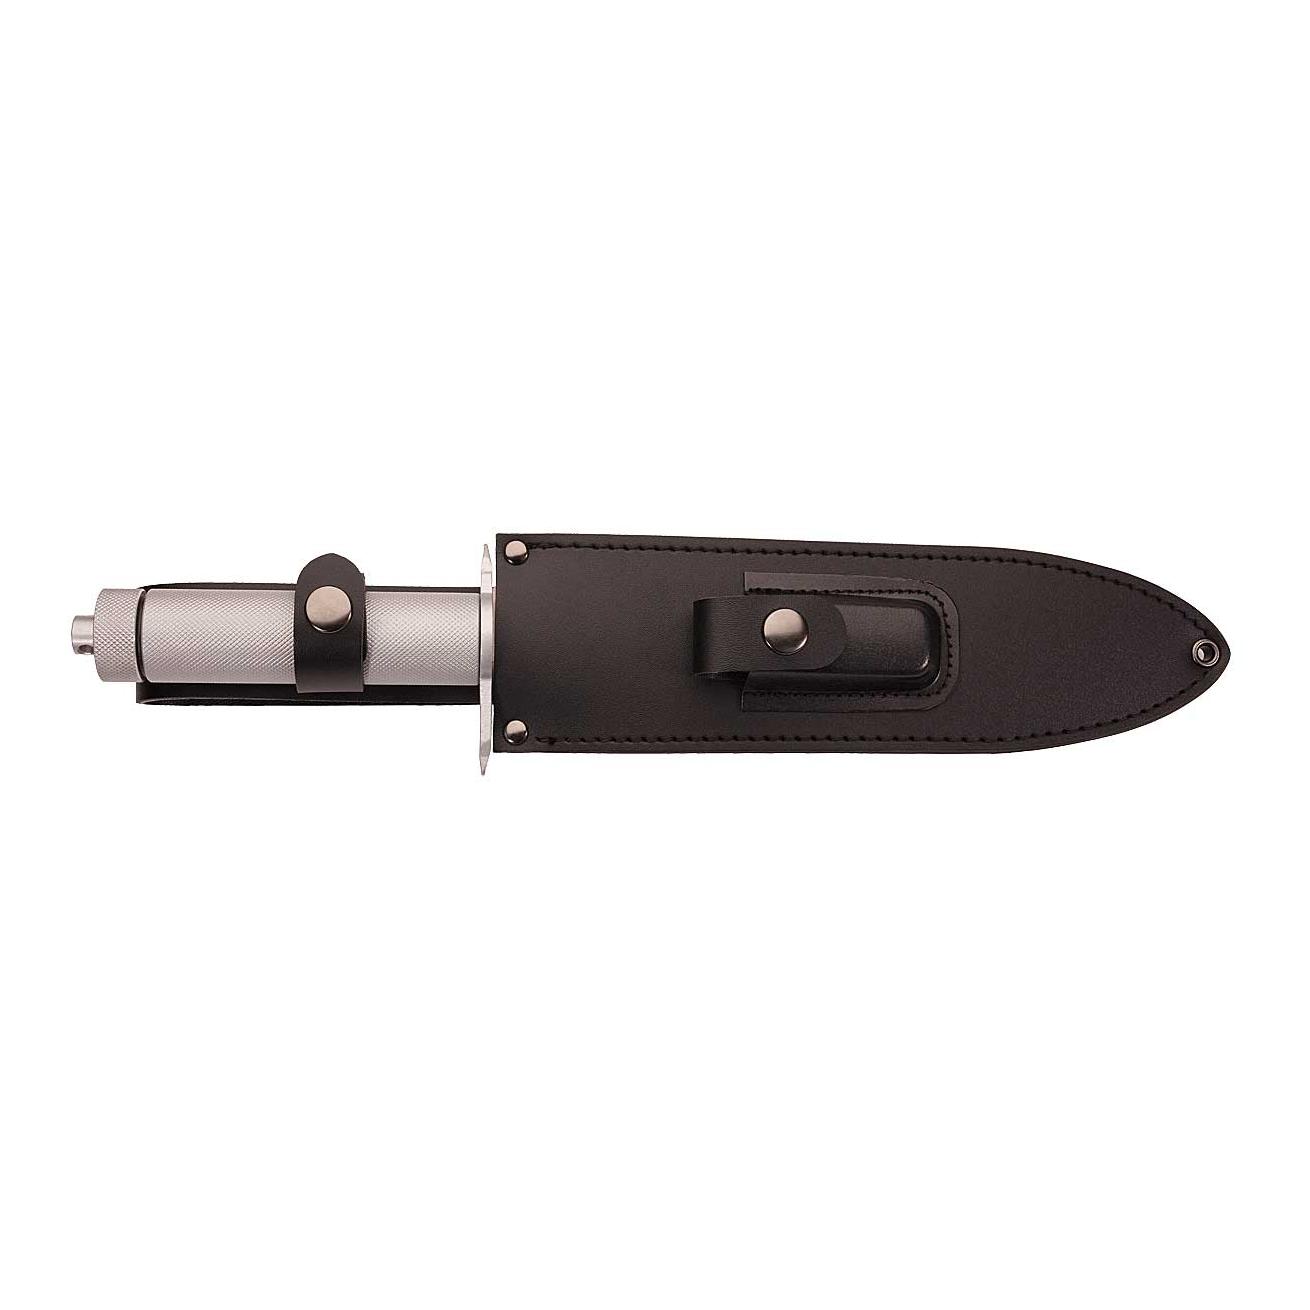 Herbertz Survival-Messer, Stahl AISI 420, Rückensäge, Aluminiumgriff, 